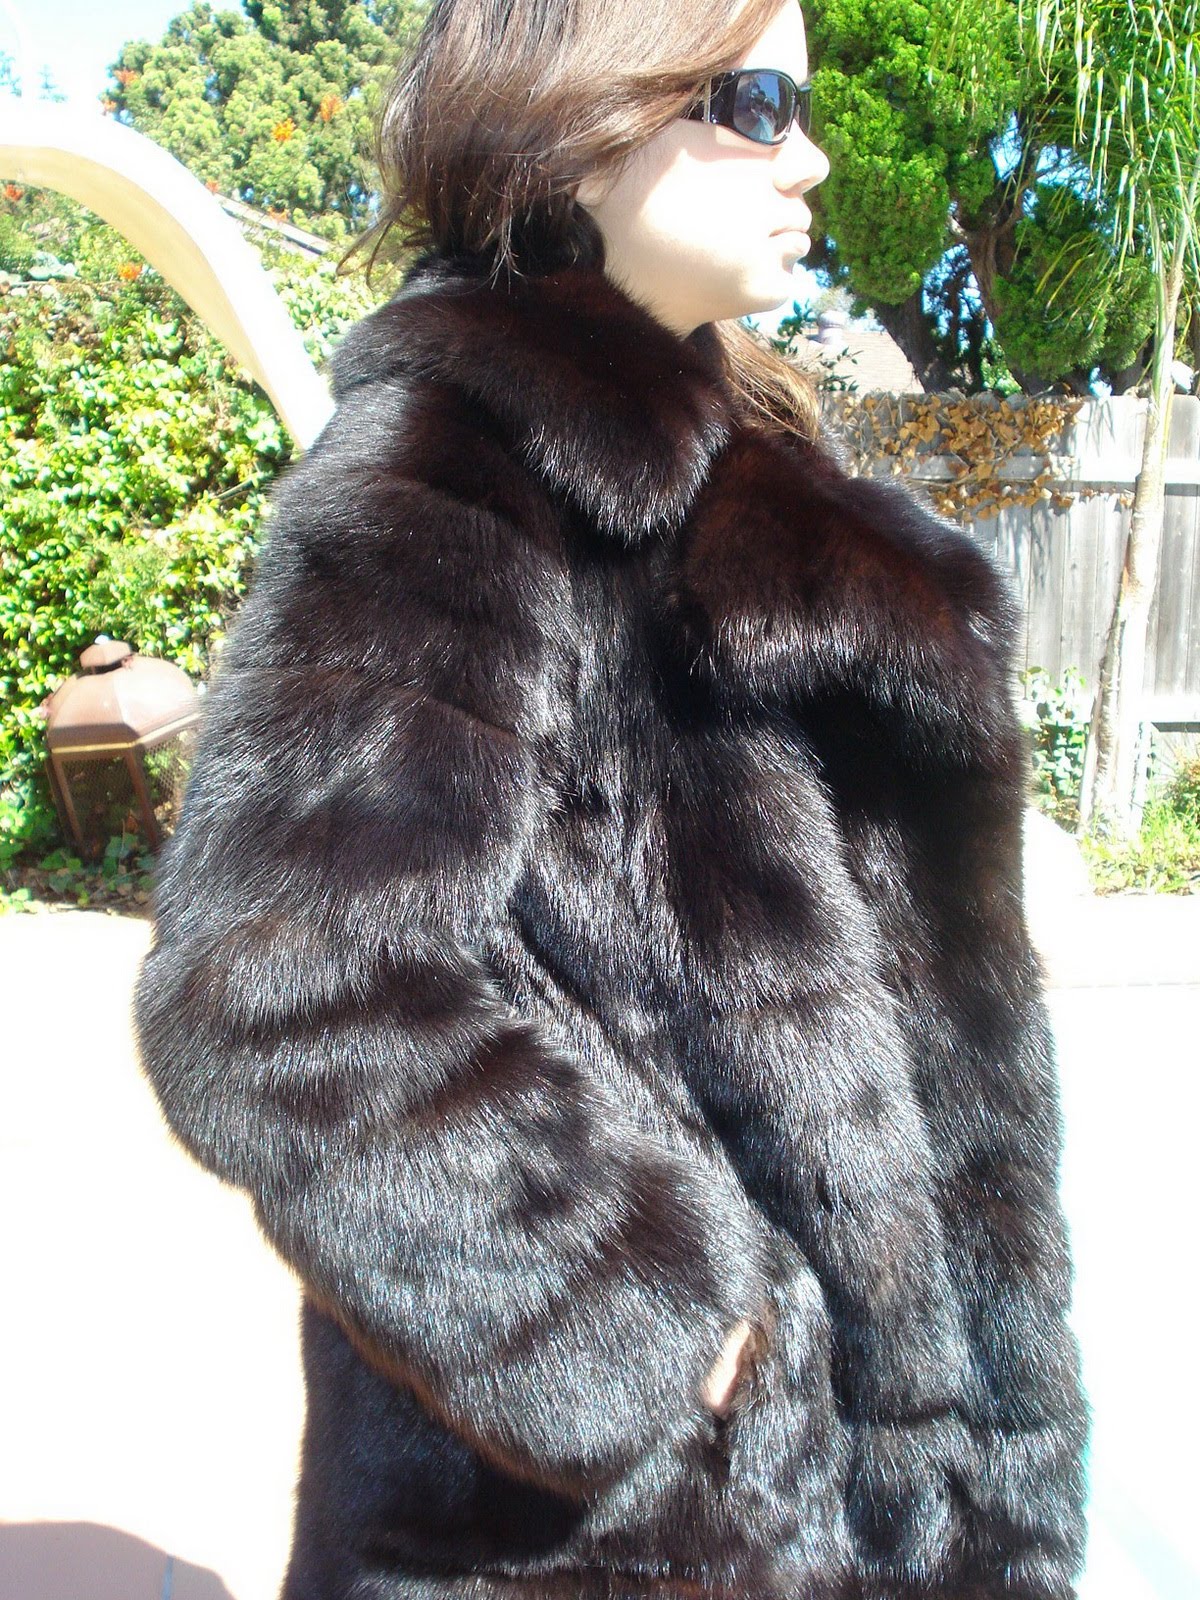 Asian mink or its fur